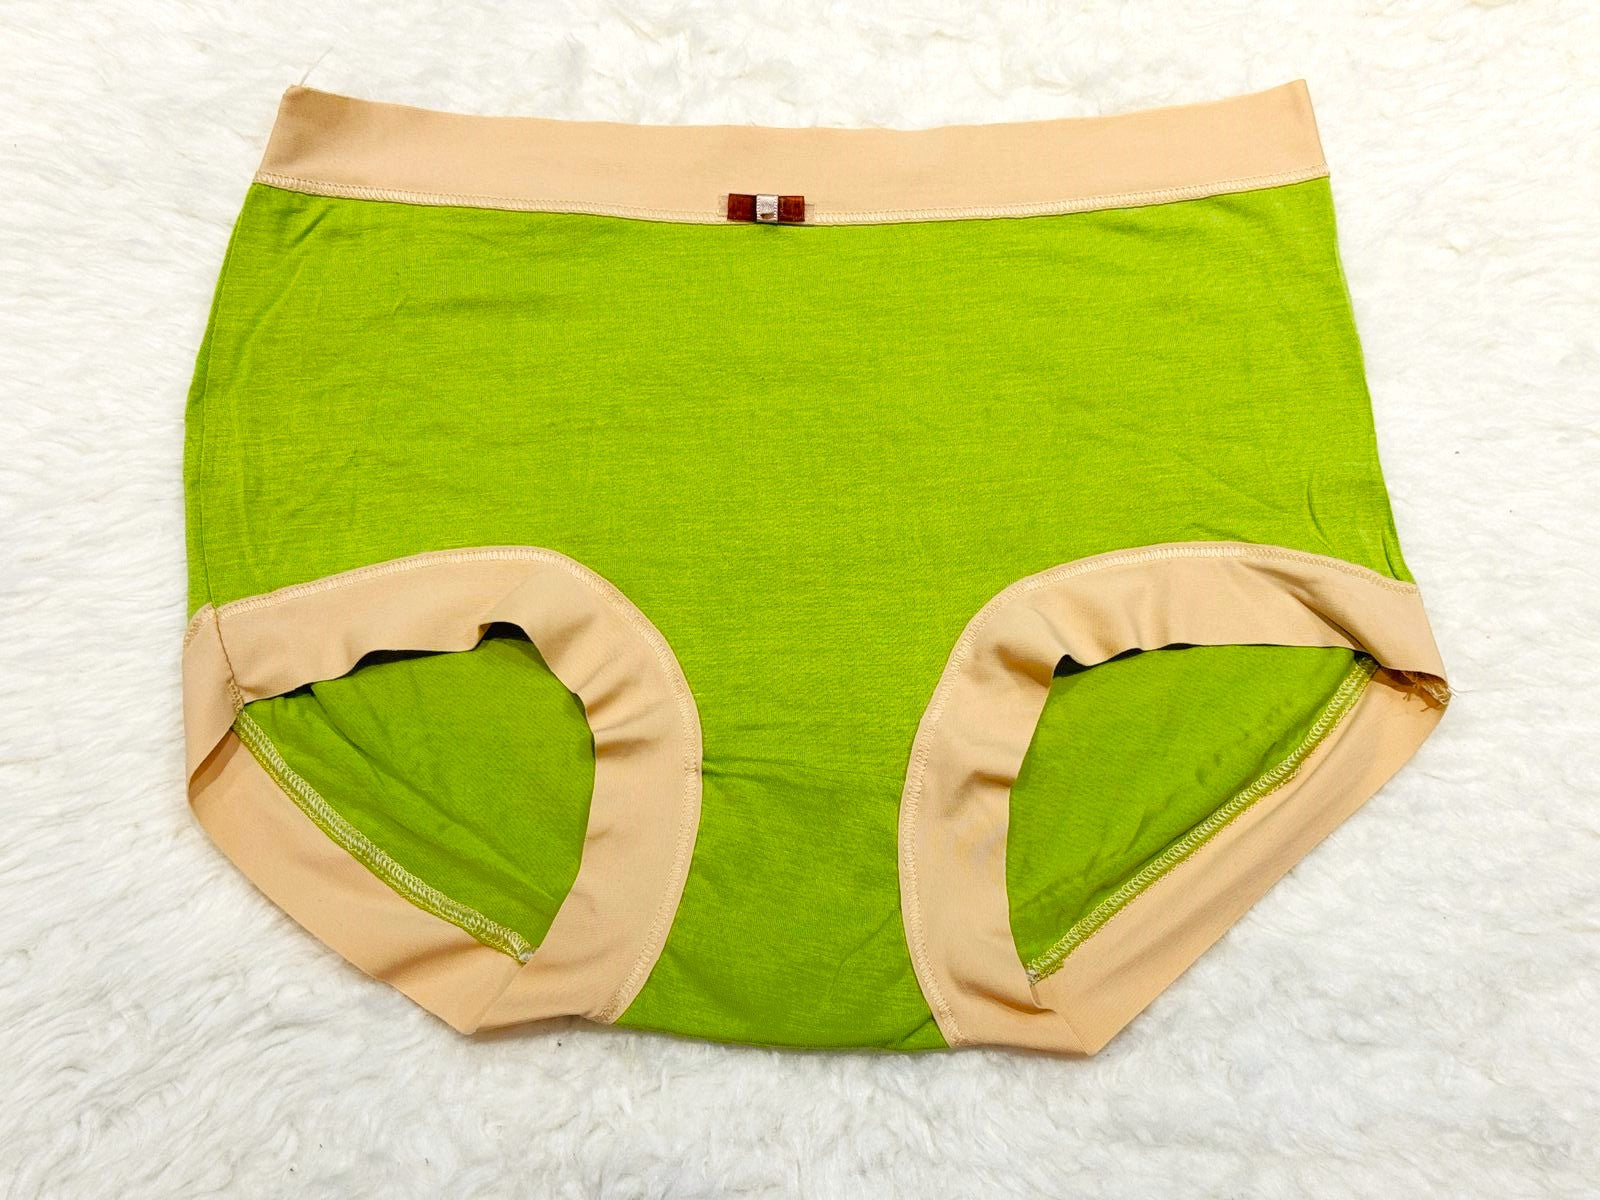 Sajiero Plus Size Plain Brief Cotton Panty best quality undergarment for ladies price in pakistan online